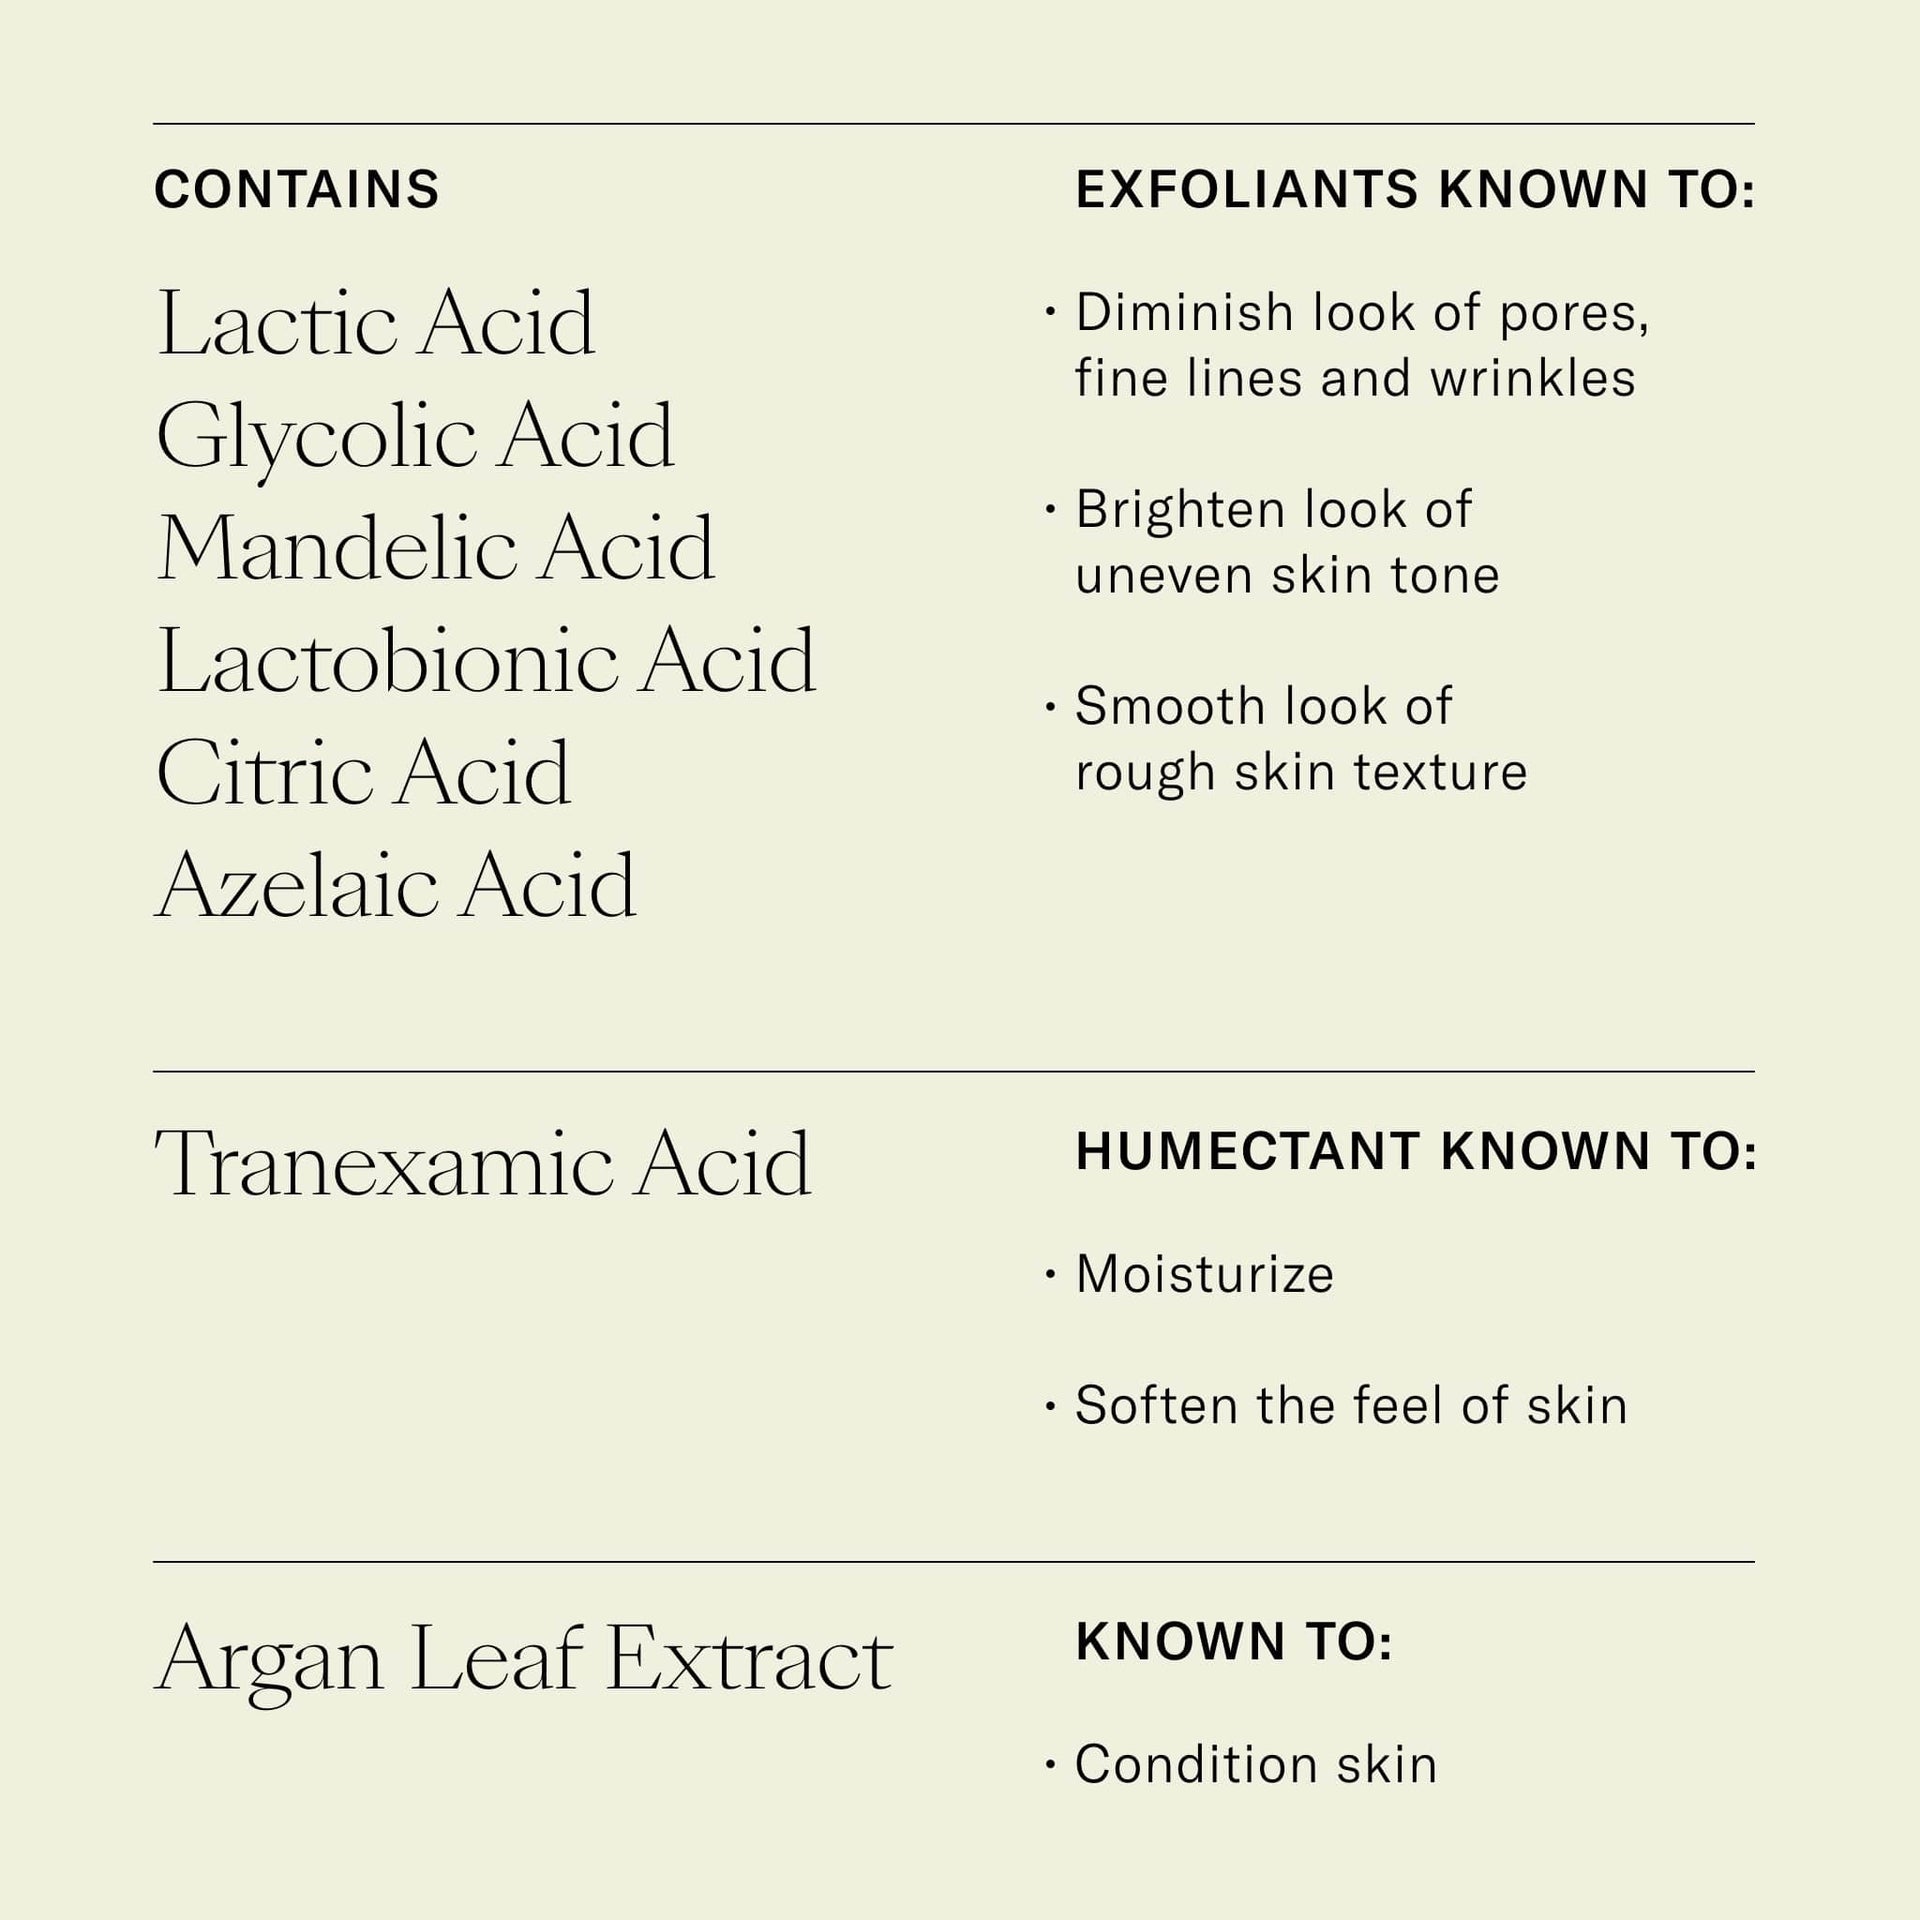 Contains Lactic Acid. Glycolic Acid. Mandelic Acid. Lactobionic Acid. Citric Acid. Azelaic Acid. Tranexamic Acid. Argan Leaf Extract. 